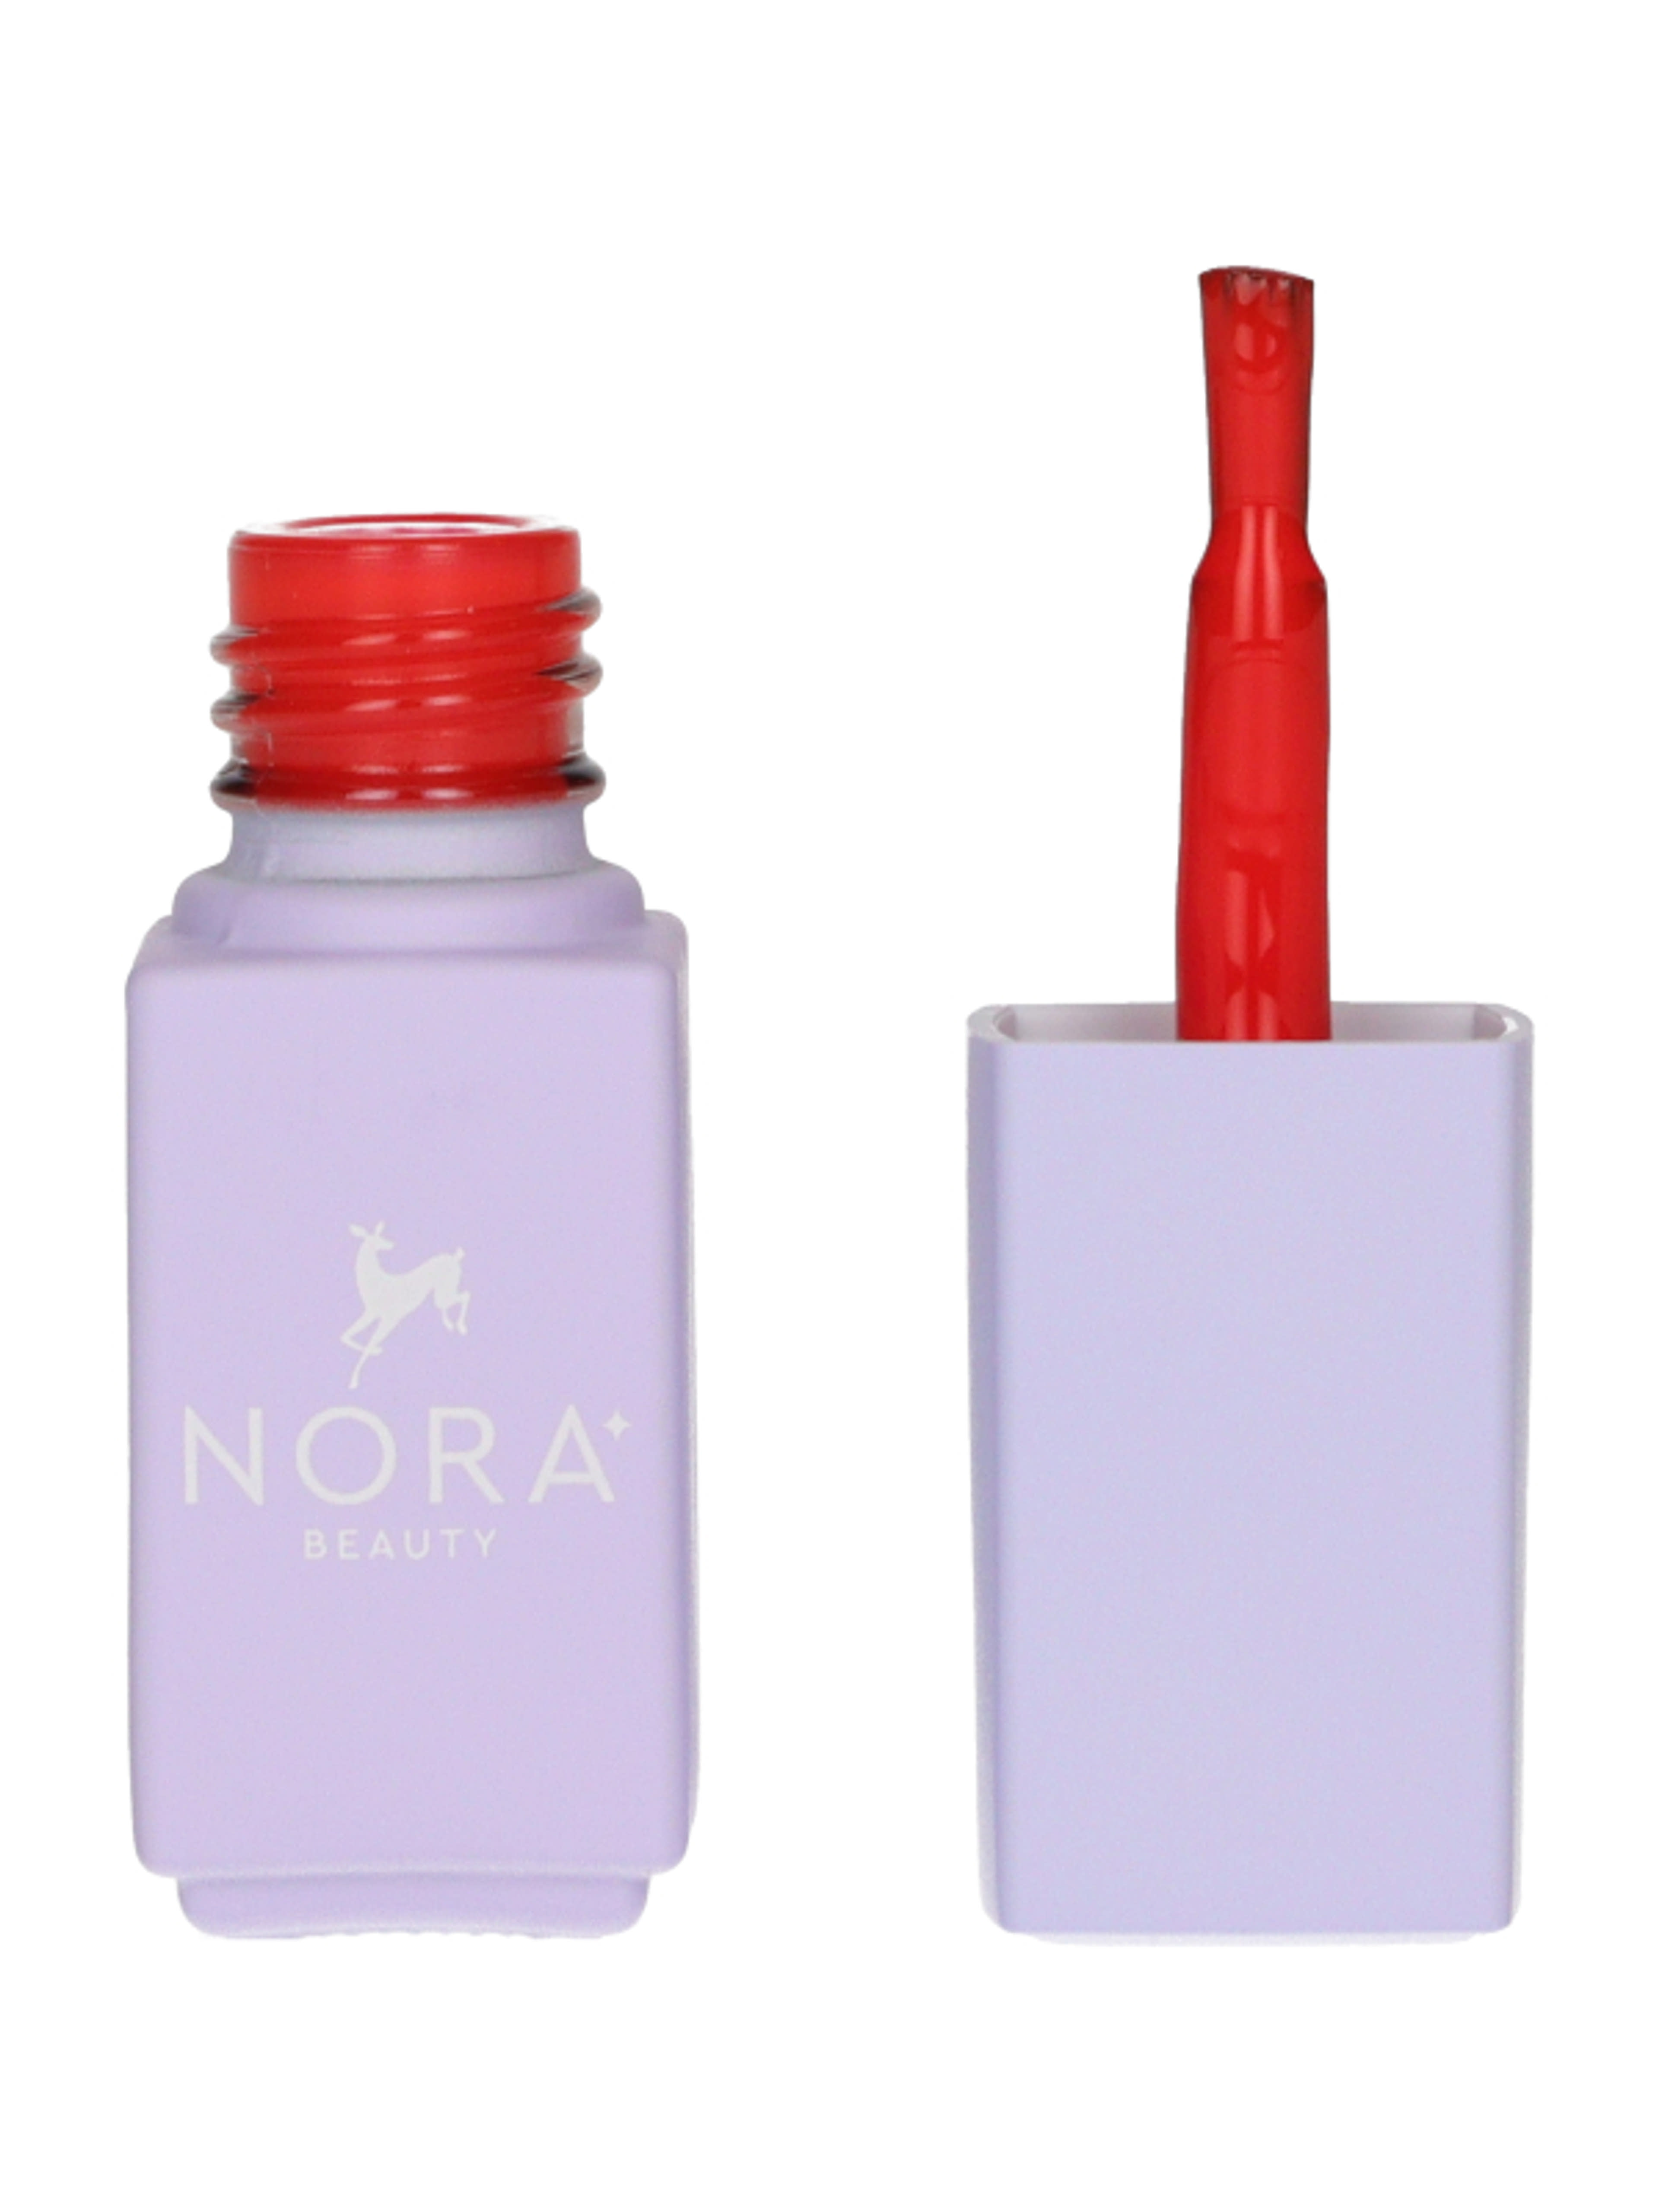 Nora Beauty UV lakkzselé /tb-01 simply red - 1 db-4